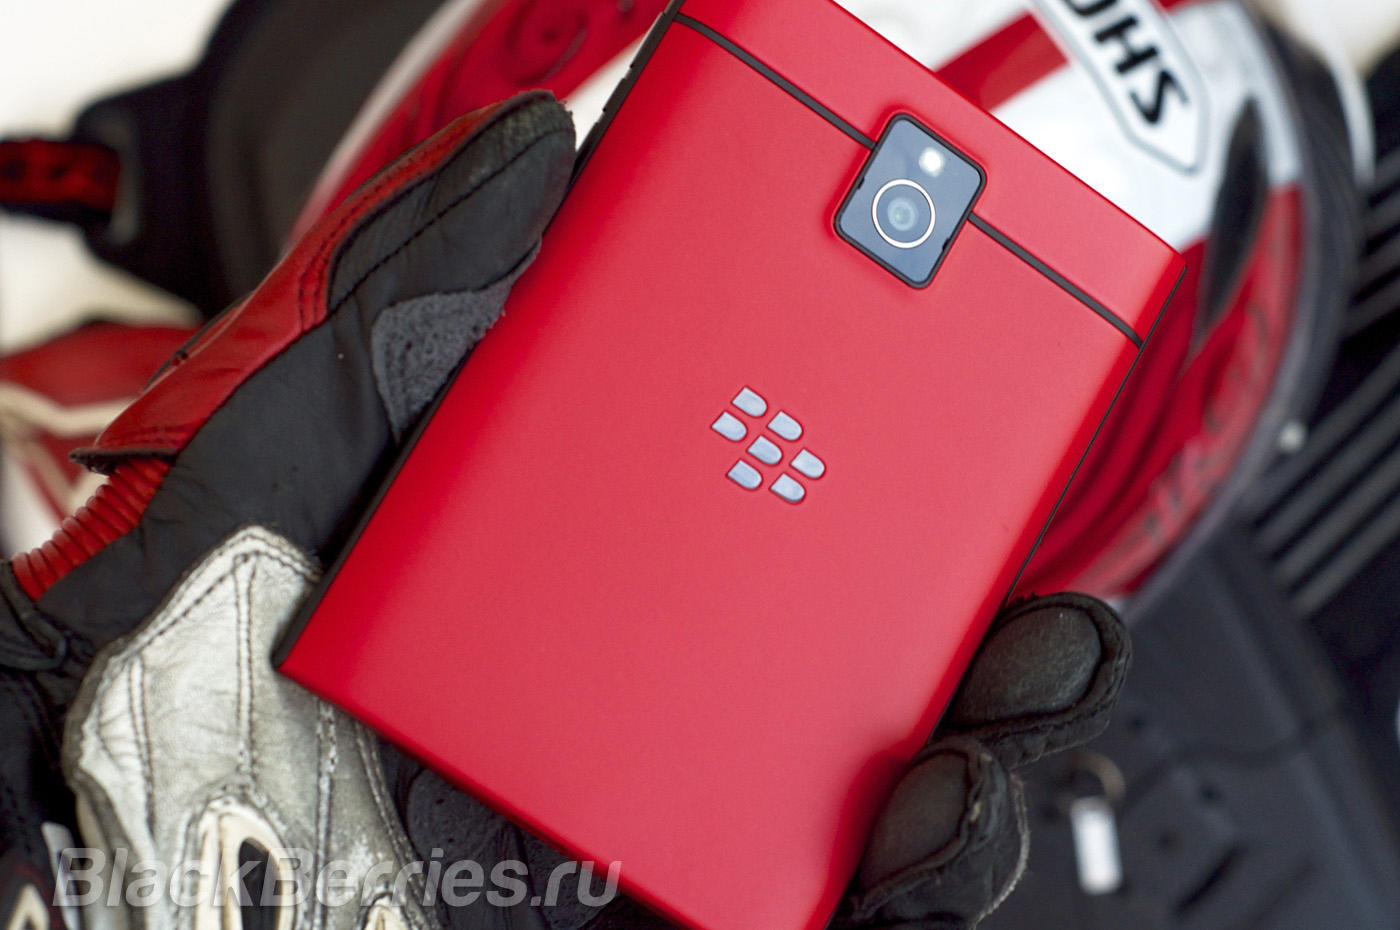 BlackBerry-Passport-Red-15